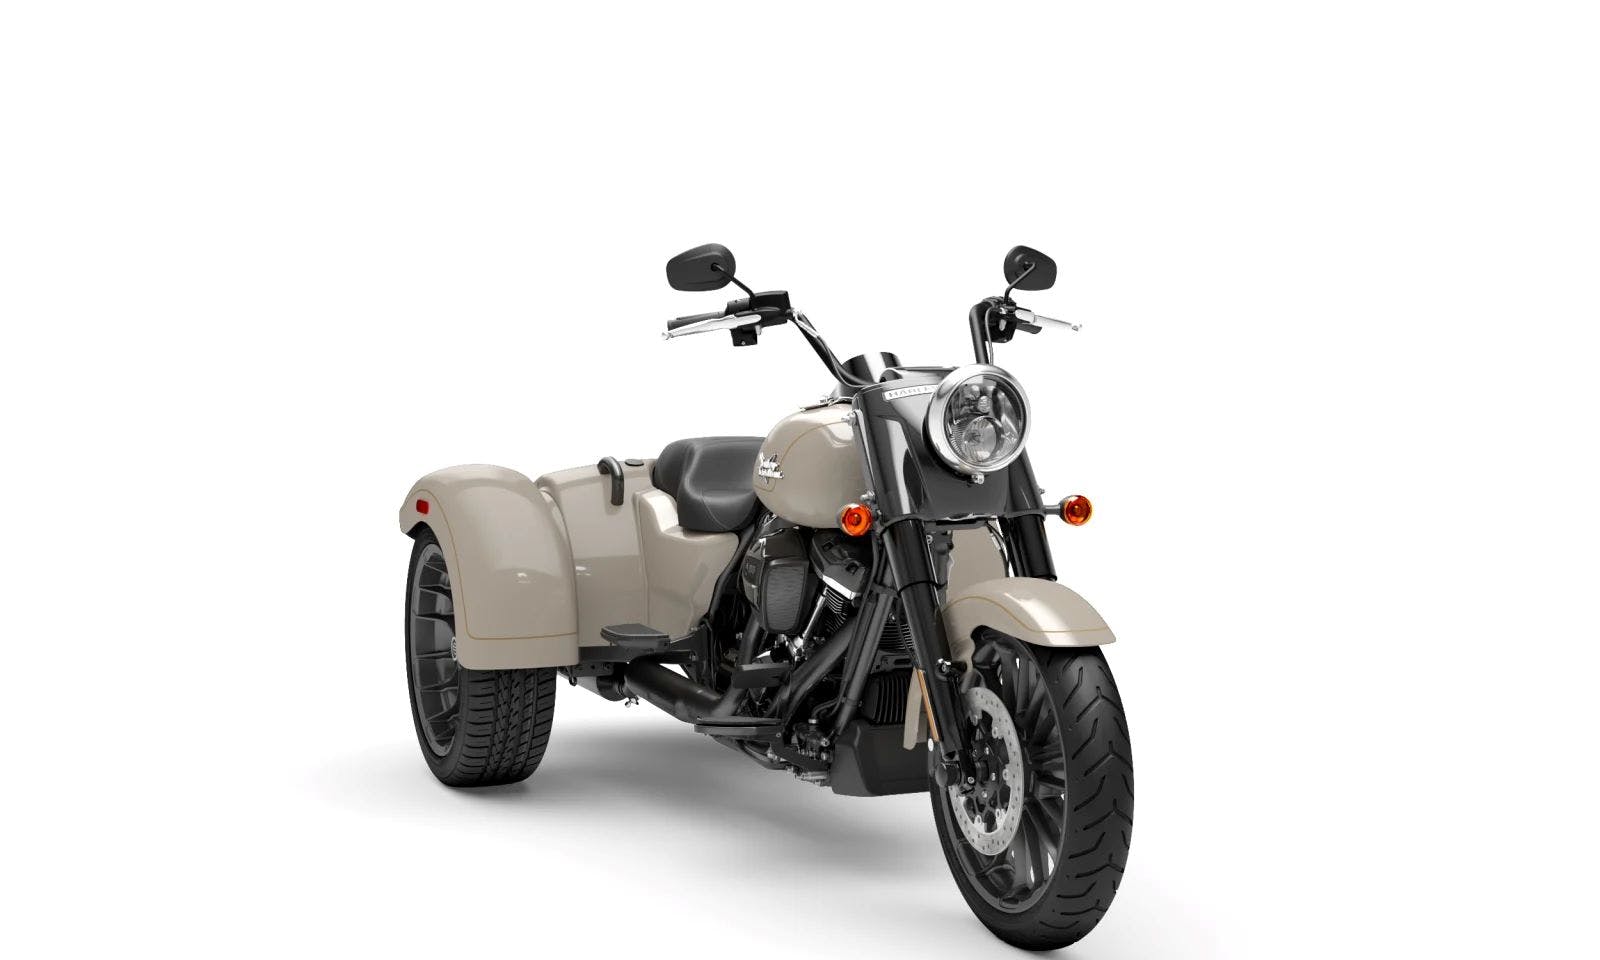 Harley Davidson freewheeler f57 top 10 three wheel motorcycles you can buy or rent